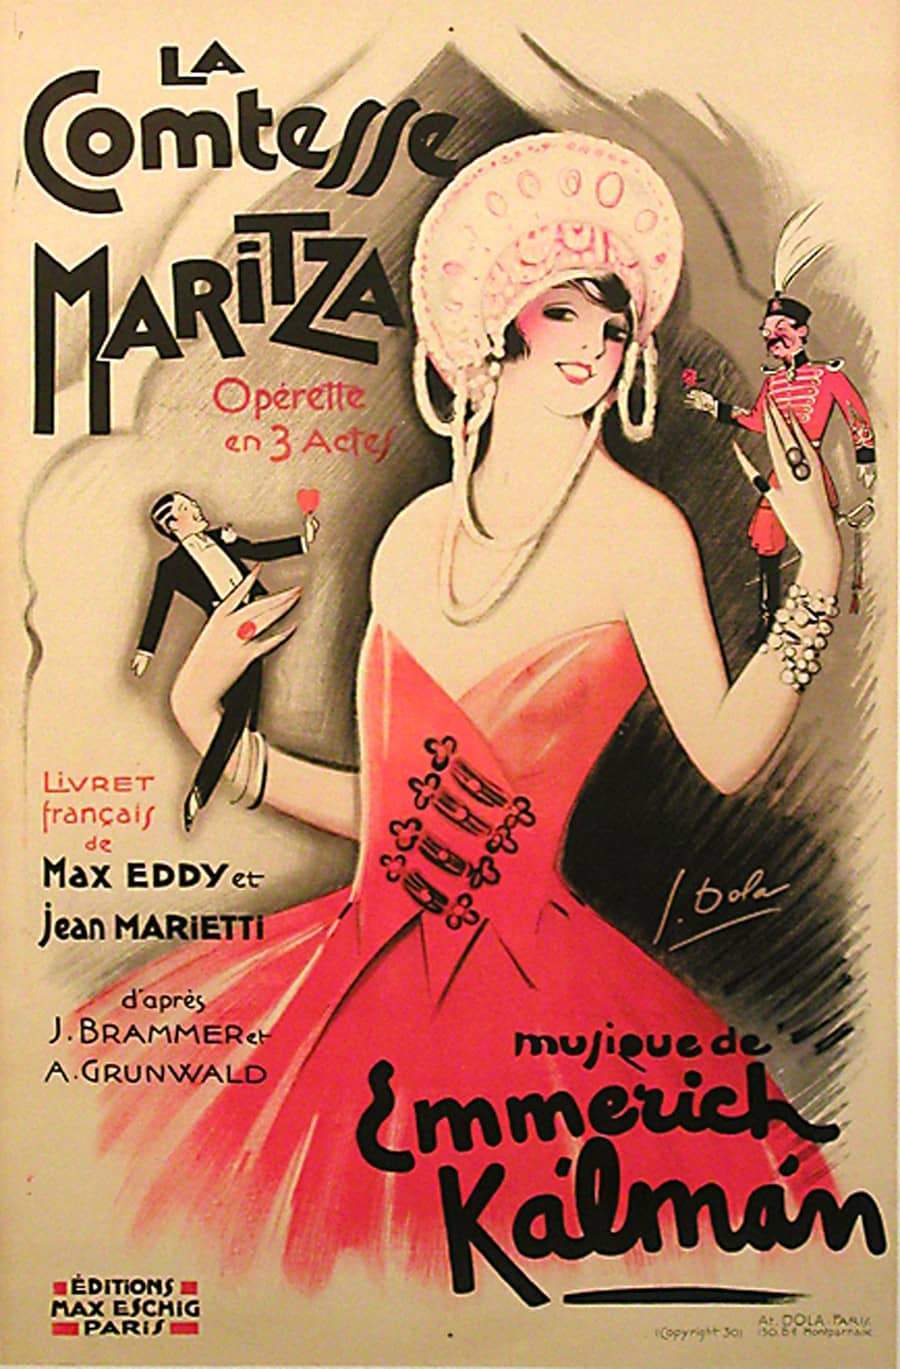 La Comtesse Maritza 1930 Original Operetta Poster by Georges Dola